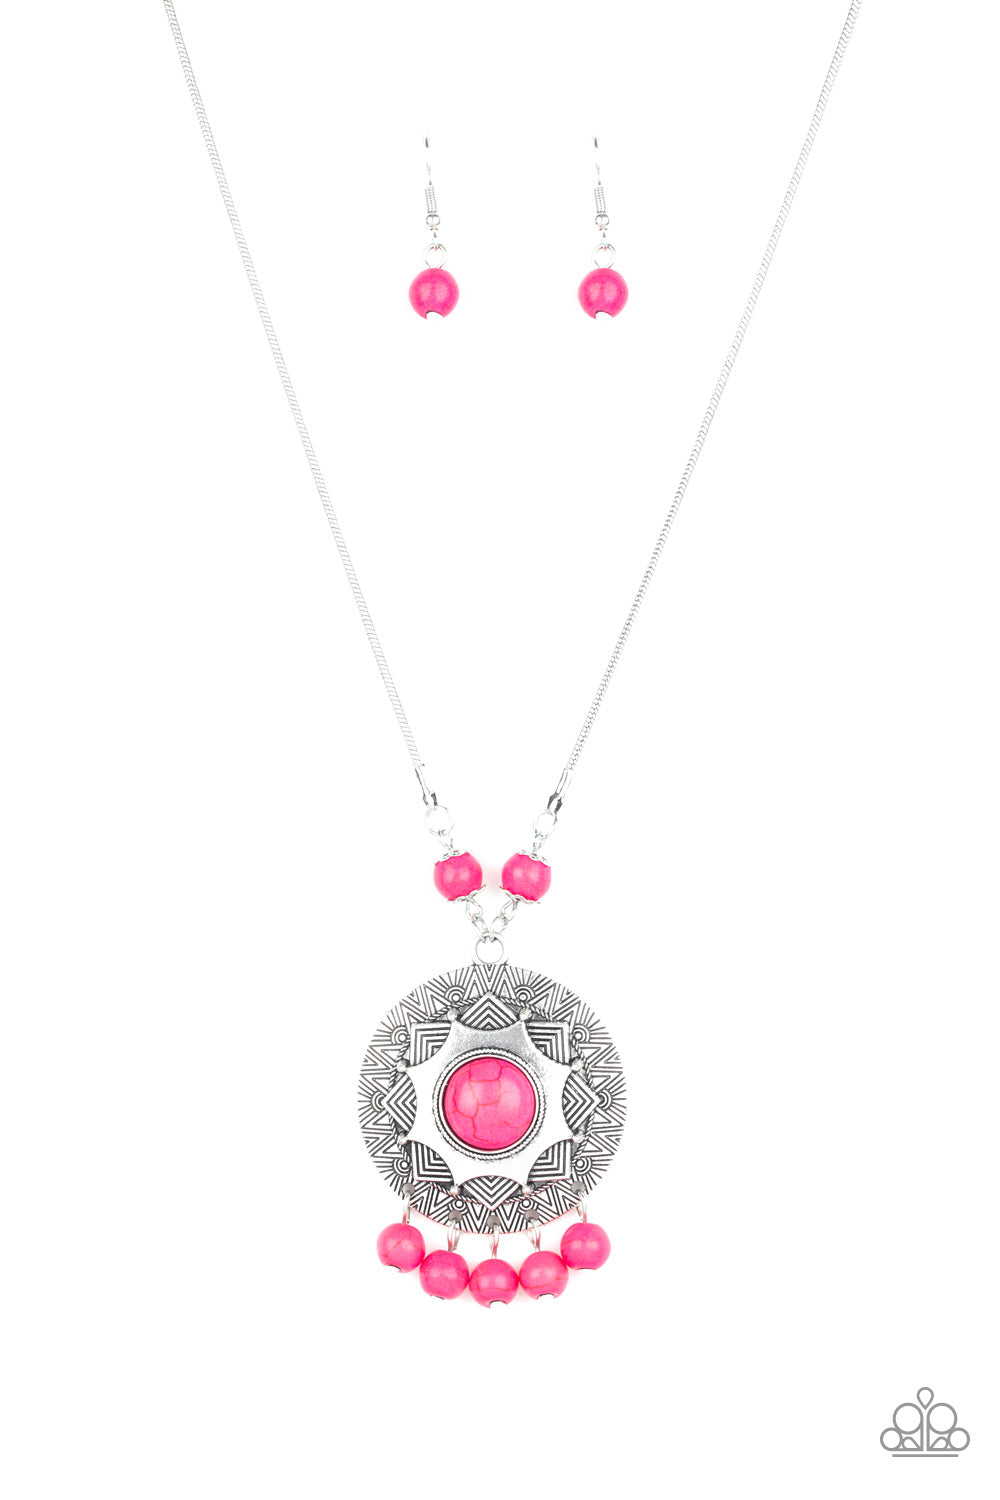 Santa Fe Garden Pink Paparazzi Necklace Cashmere Pink Jewels - Cashmere Pink Jewels & Accessories, Cashmere Pink Jewels & Accessories - Paparazzi